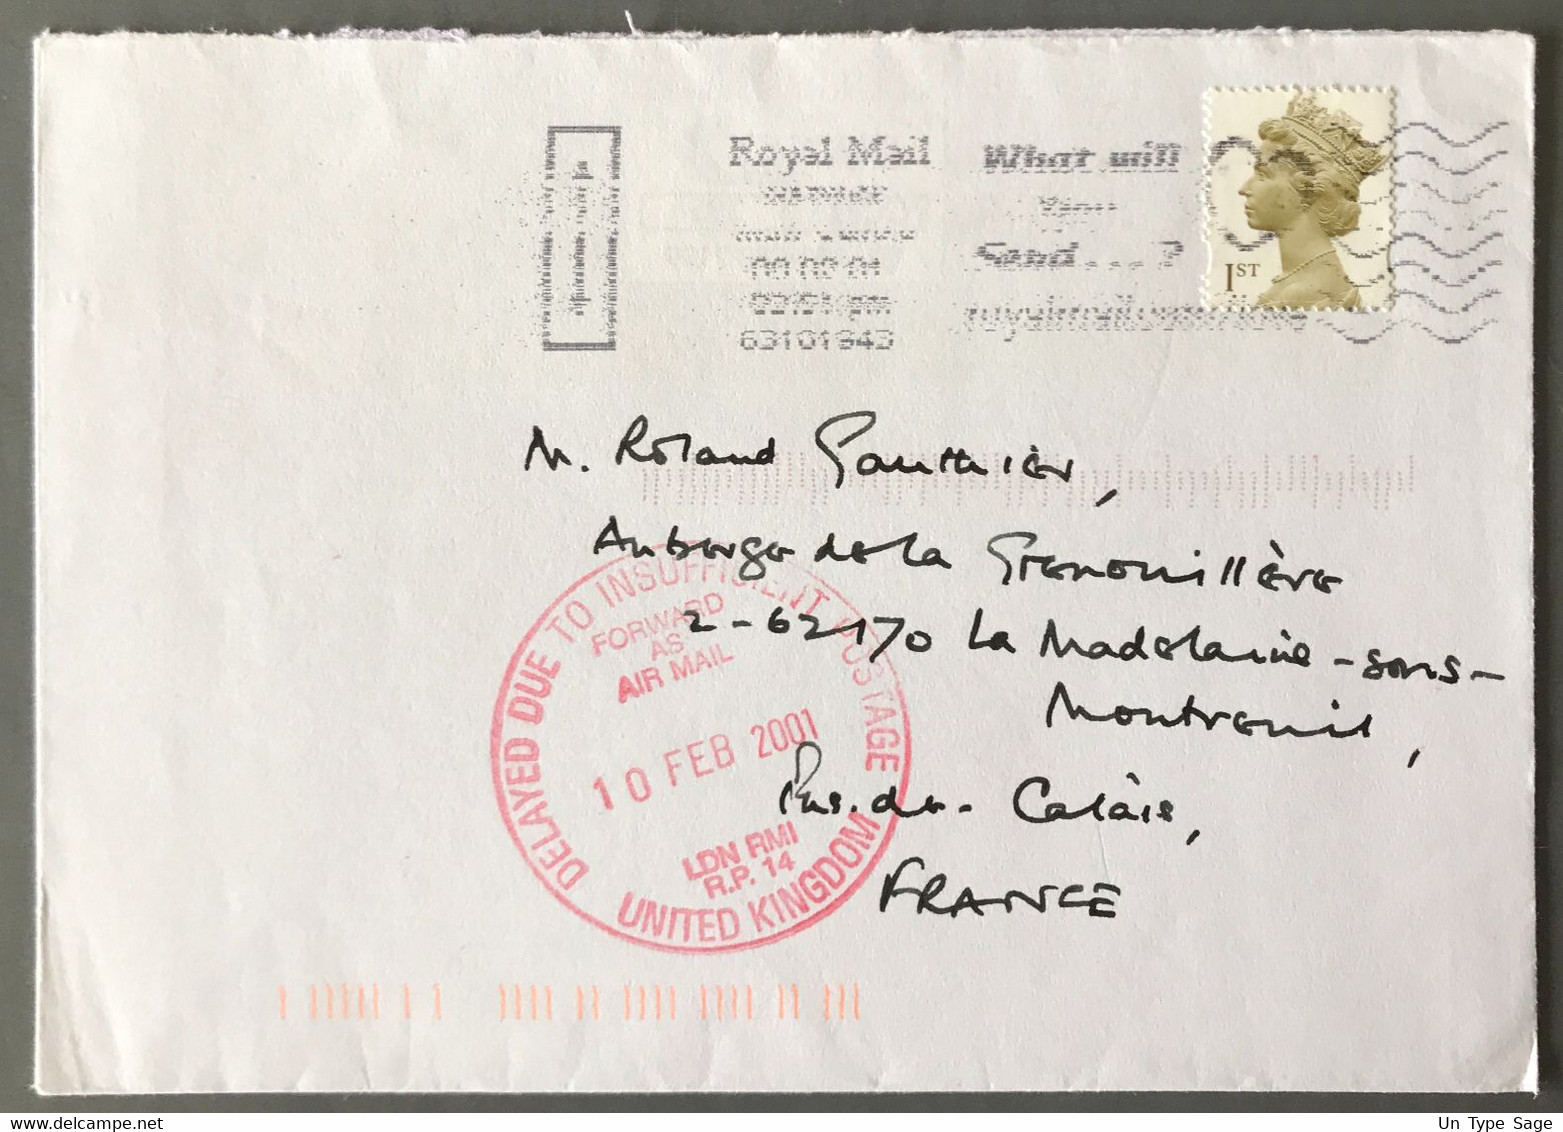 Grande-Bretagne, Type Machin 1st Sur Enveloppe, CACHET "DELAYED DUE TO INSUFFICIENT POSTAGE" - (W1204) - Covers & Documents